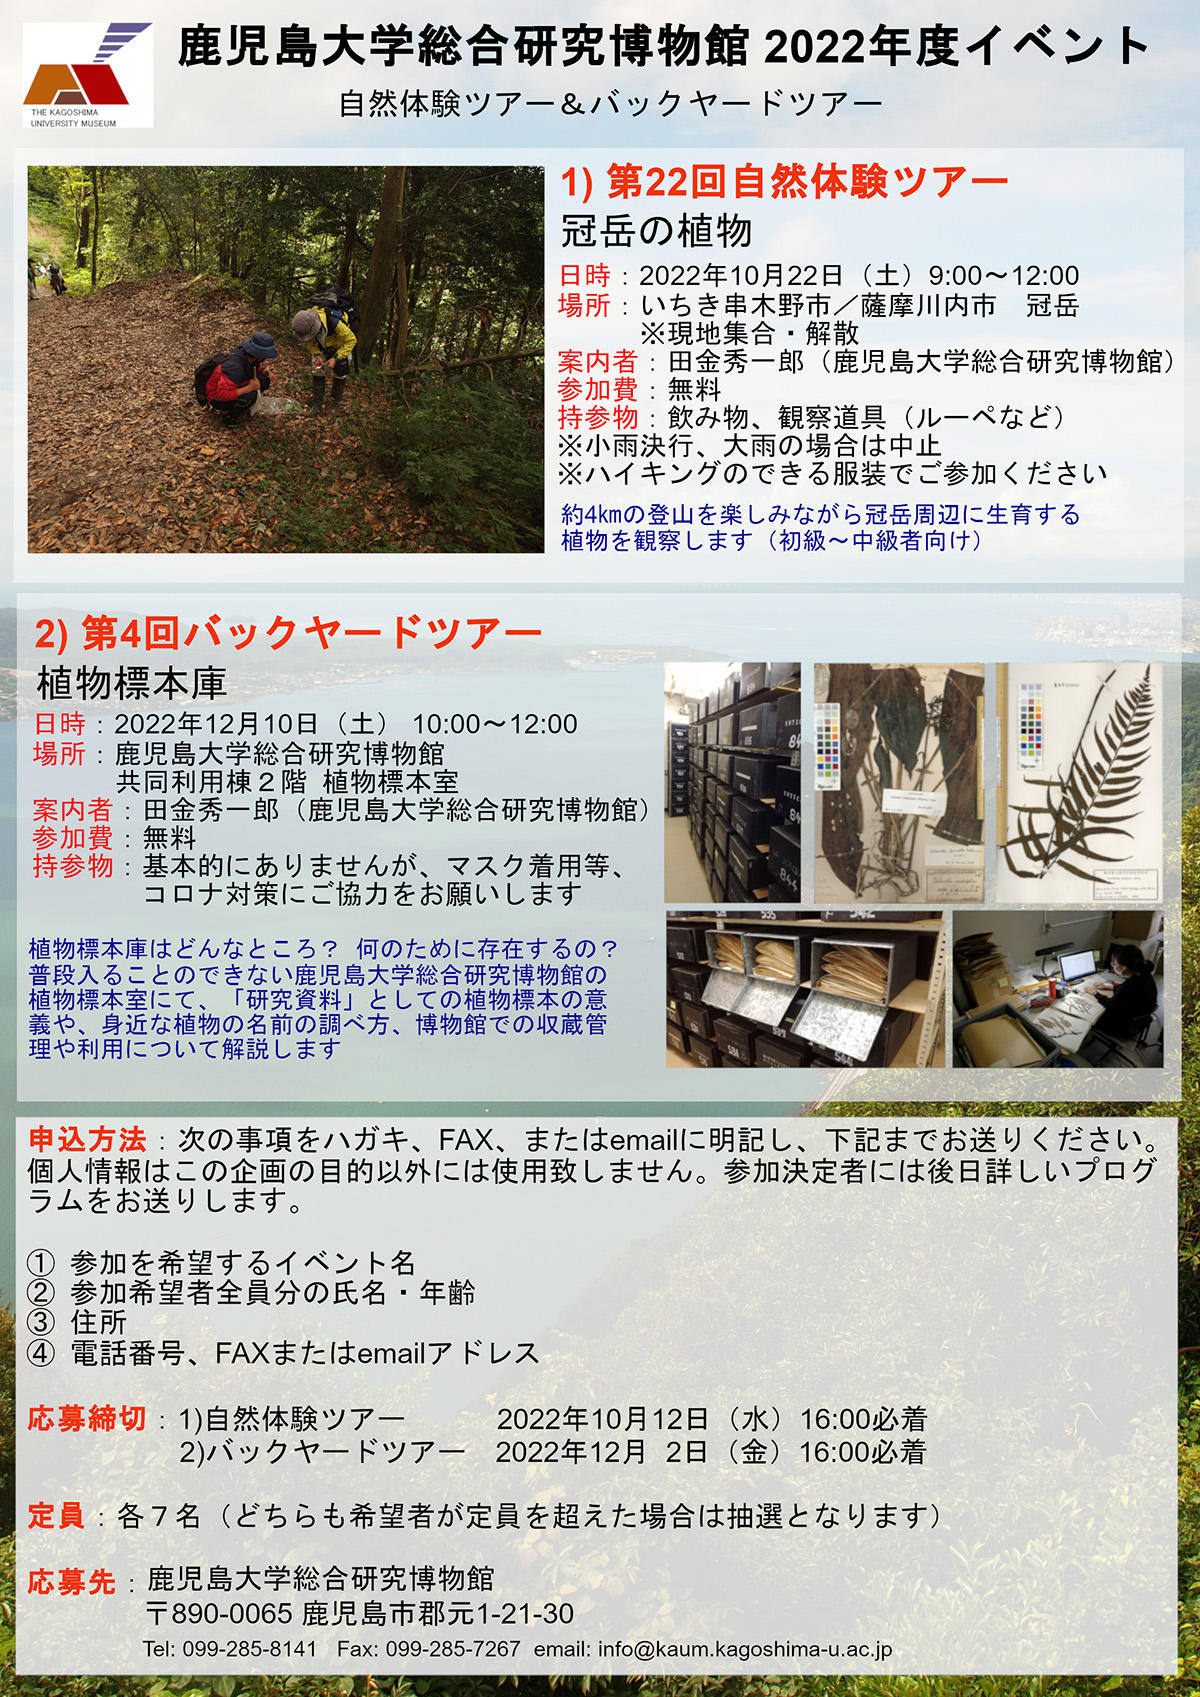 https://www.kagoshima-u.ac.jp/information/20220929sizen01.jpg